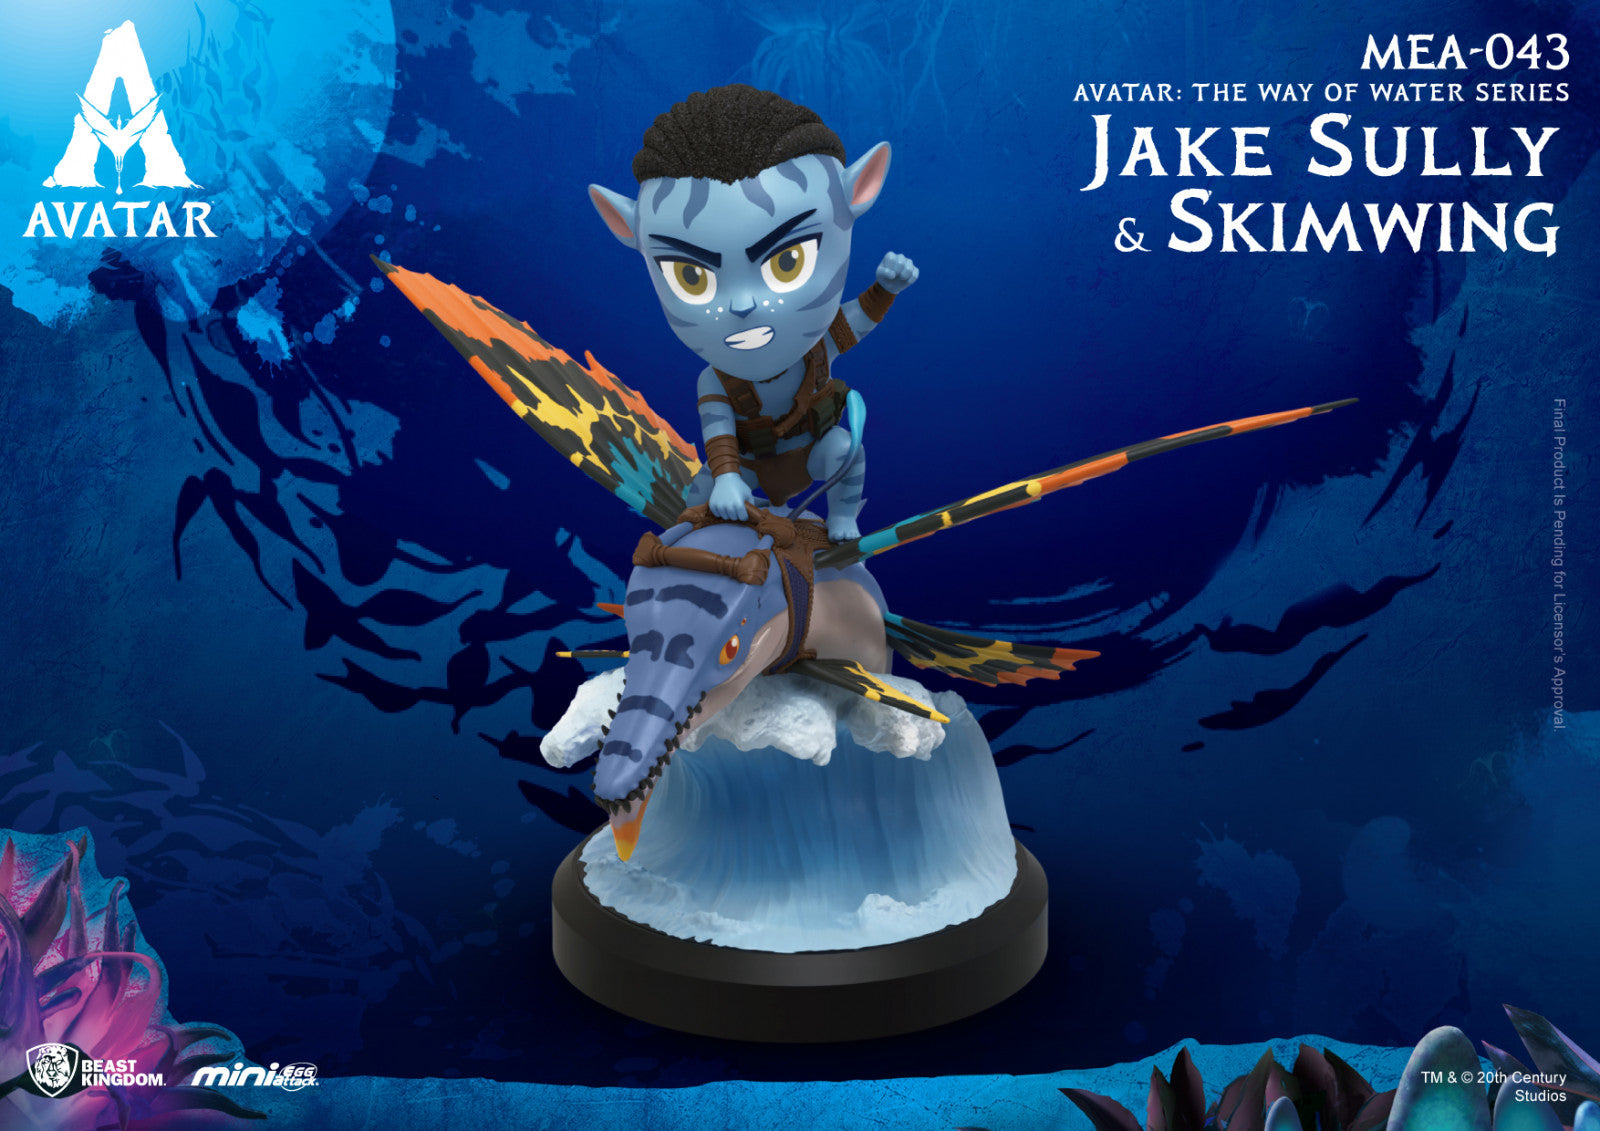 Beast Kingdom Mini Egg Attack Avatar the Way of Water Series Jake Sully & Skimwing